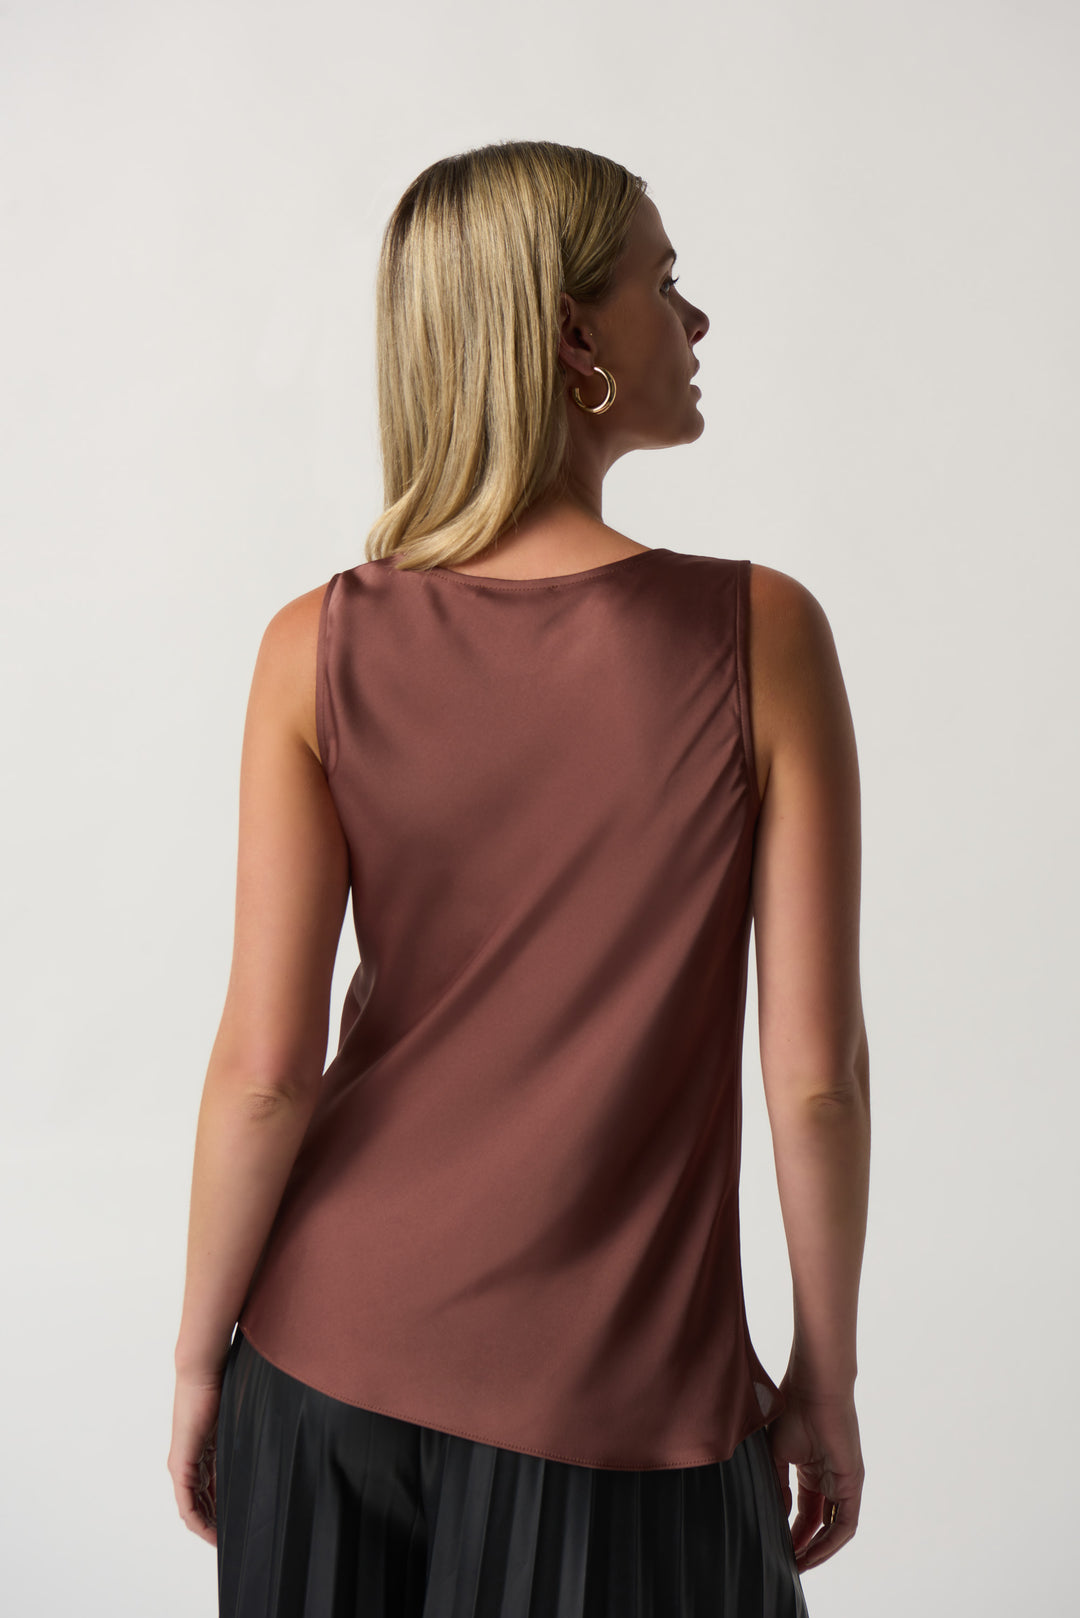 Joseph Ribkoff Fall 2023 women's business casual silk satin sleeveless tunic blouse top - toffee back